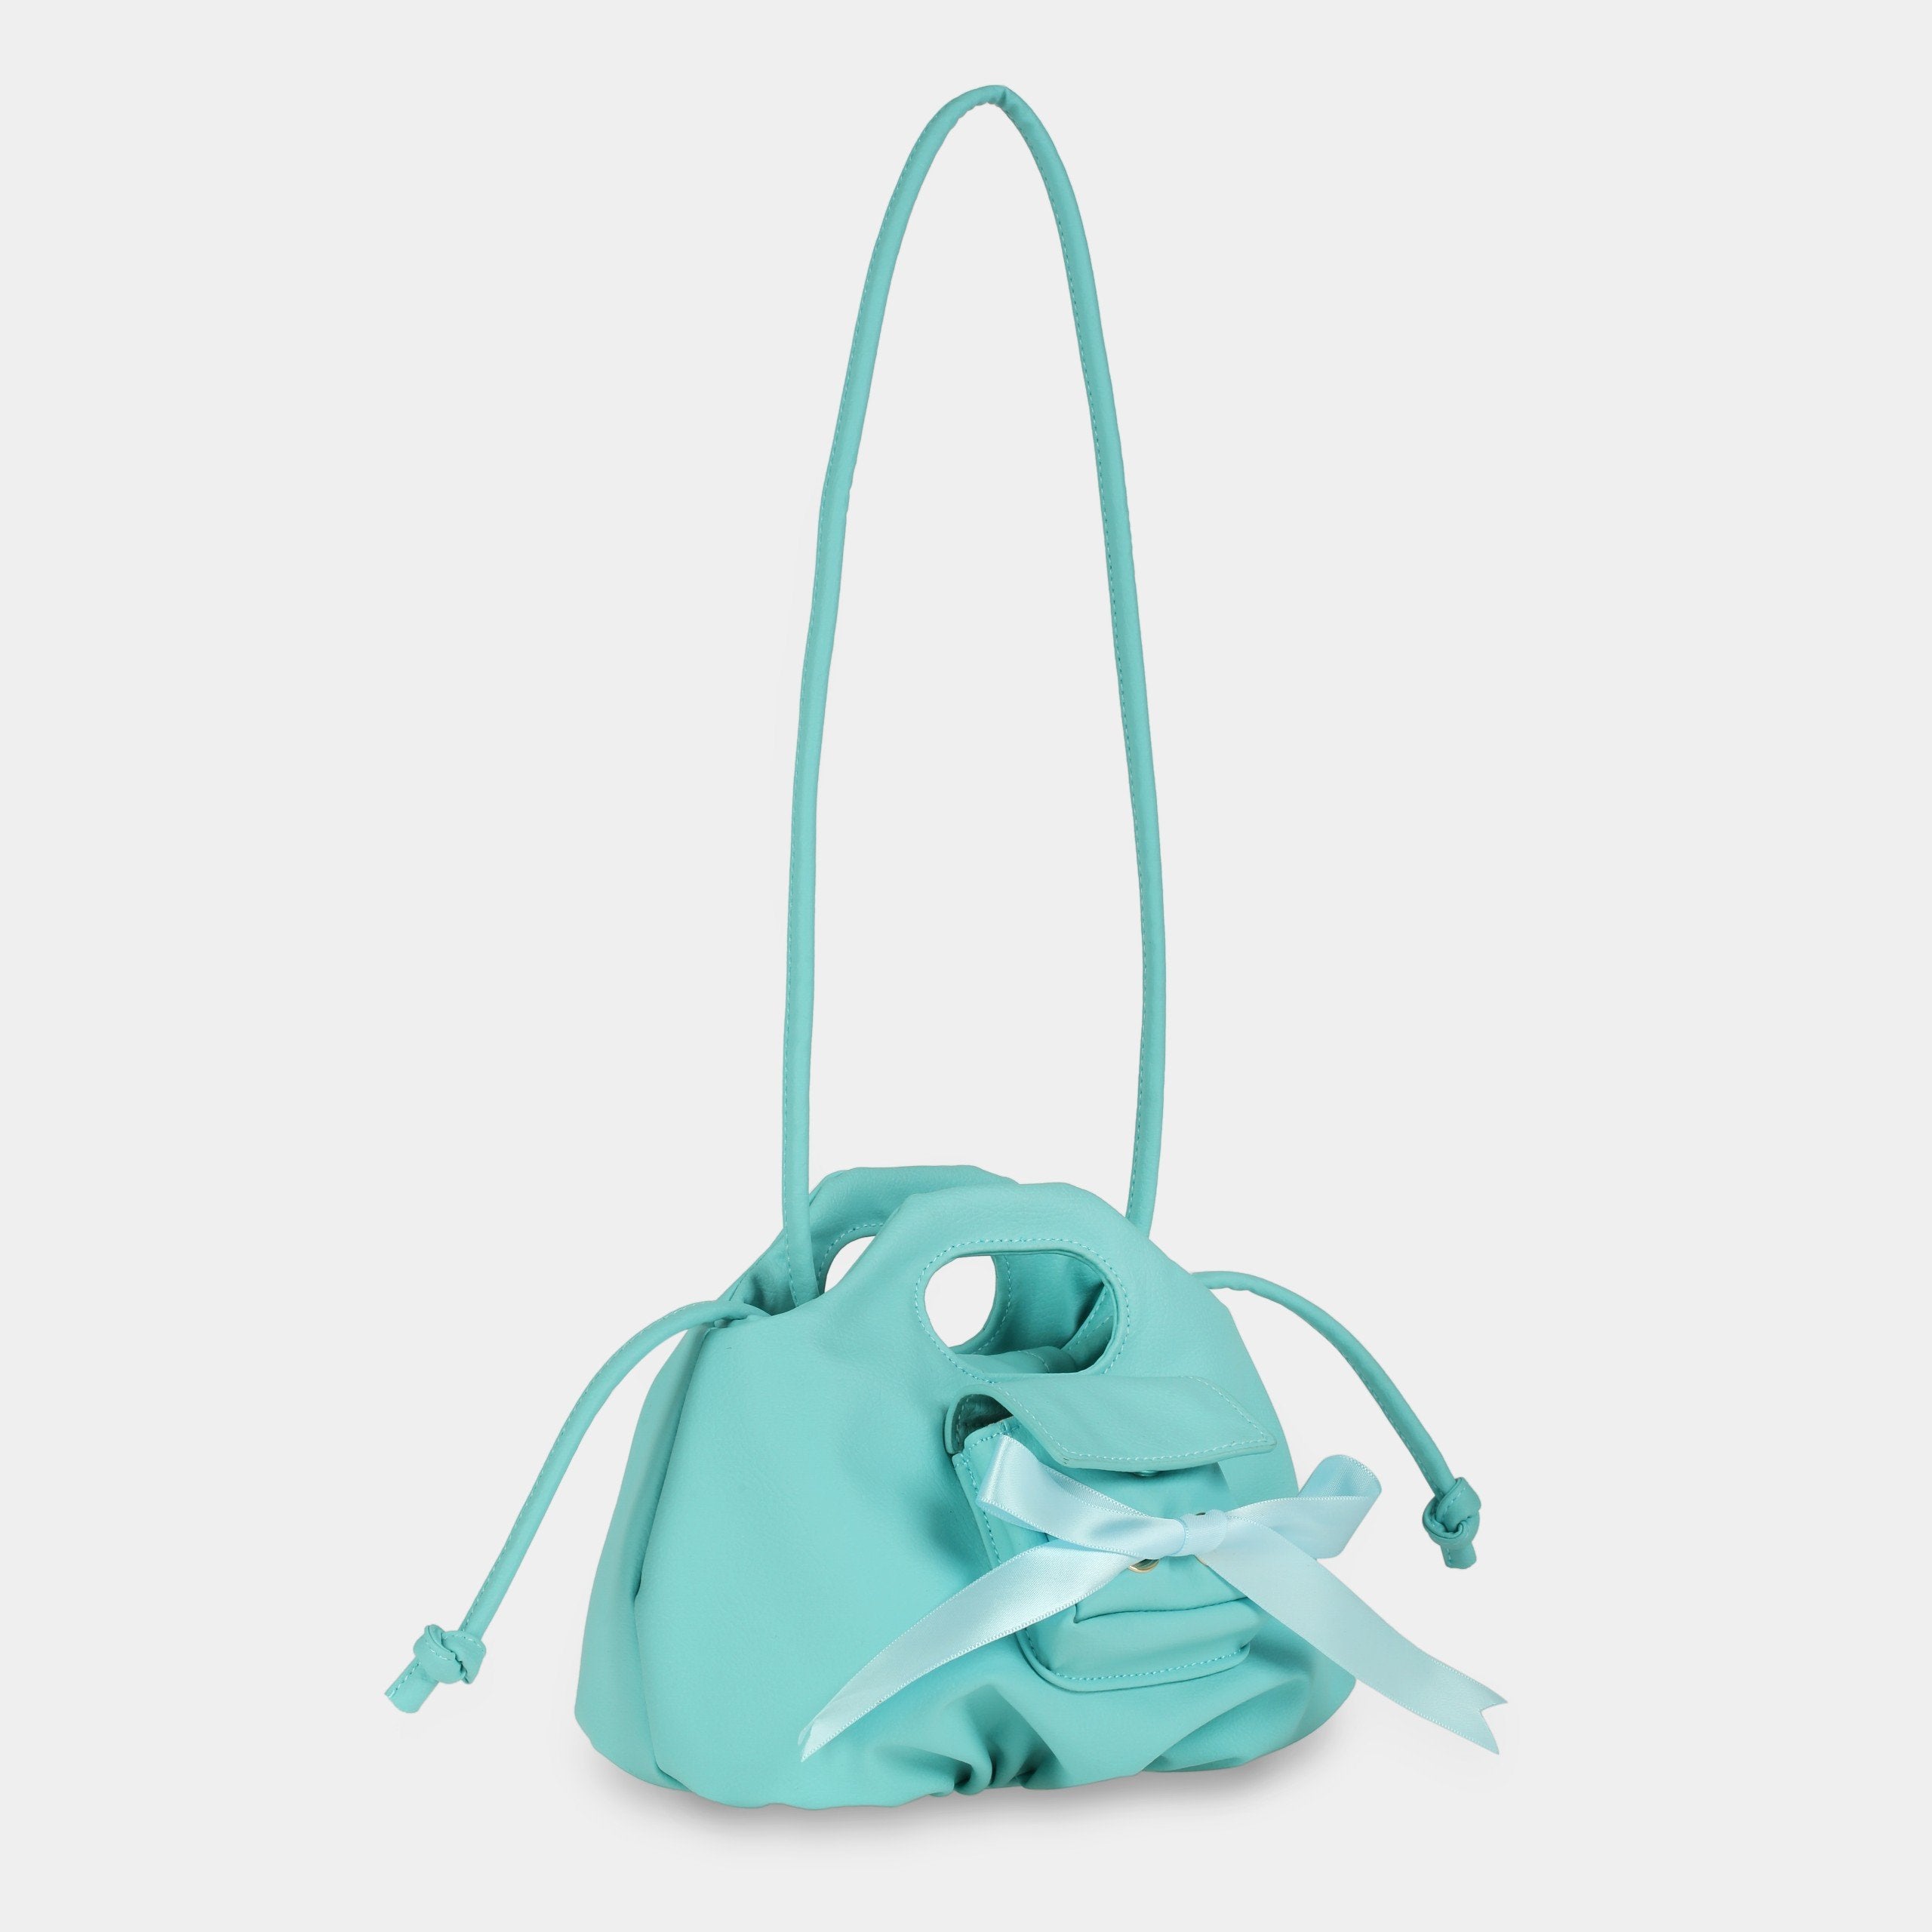 Flower Mini Mini Pocket & Bow handbag in blue pastel